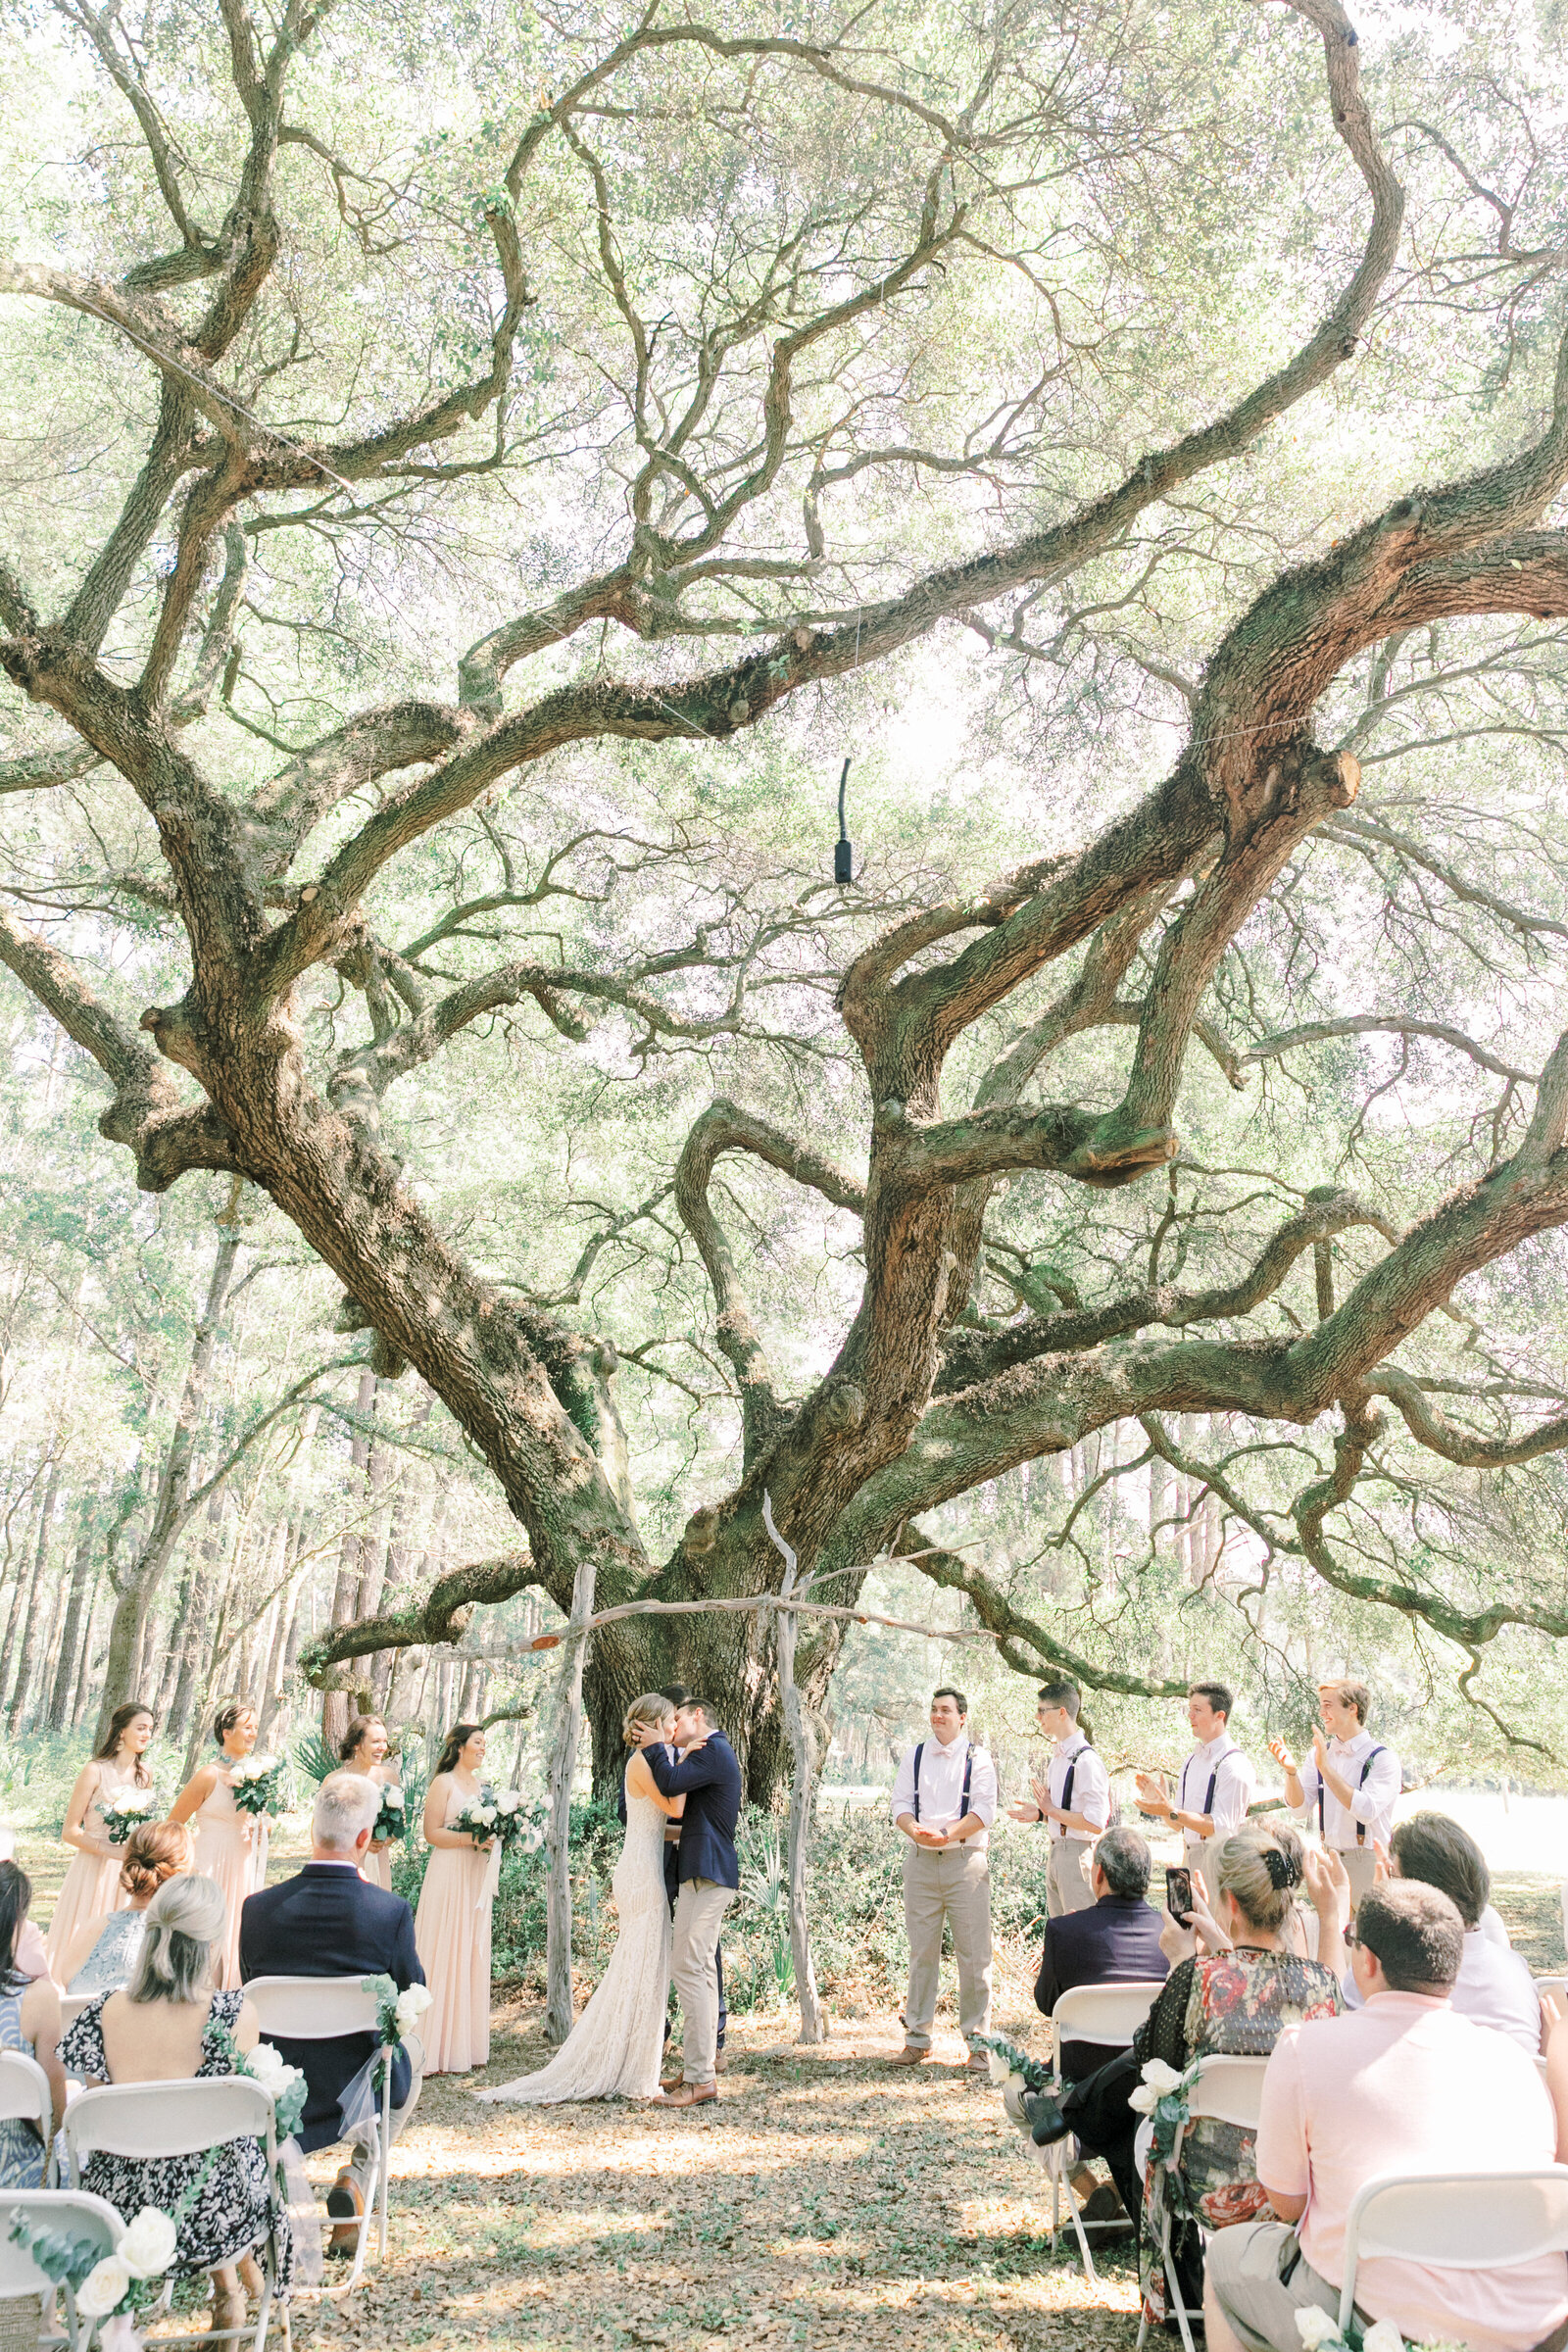 wedding ceremony under a tree